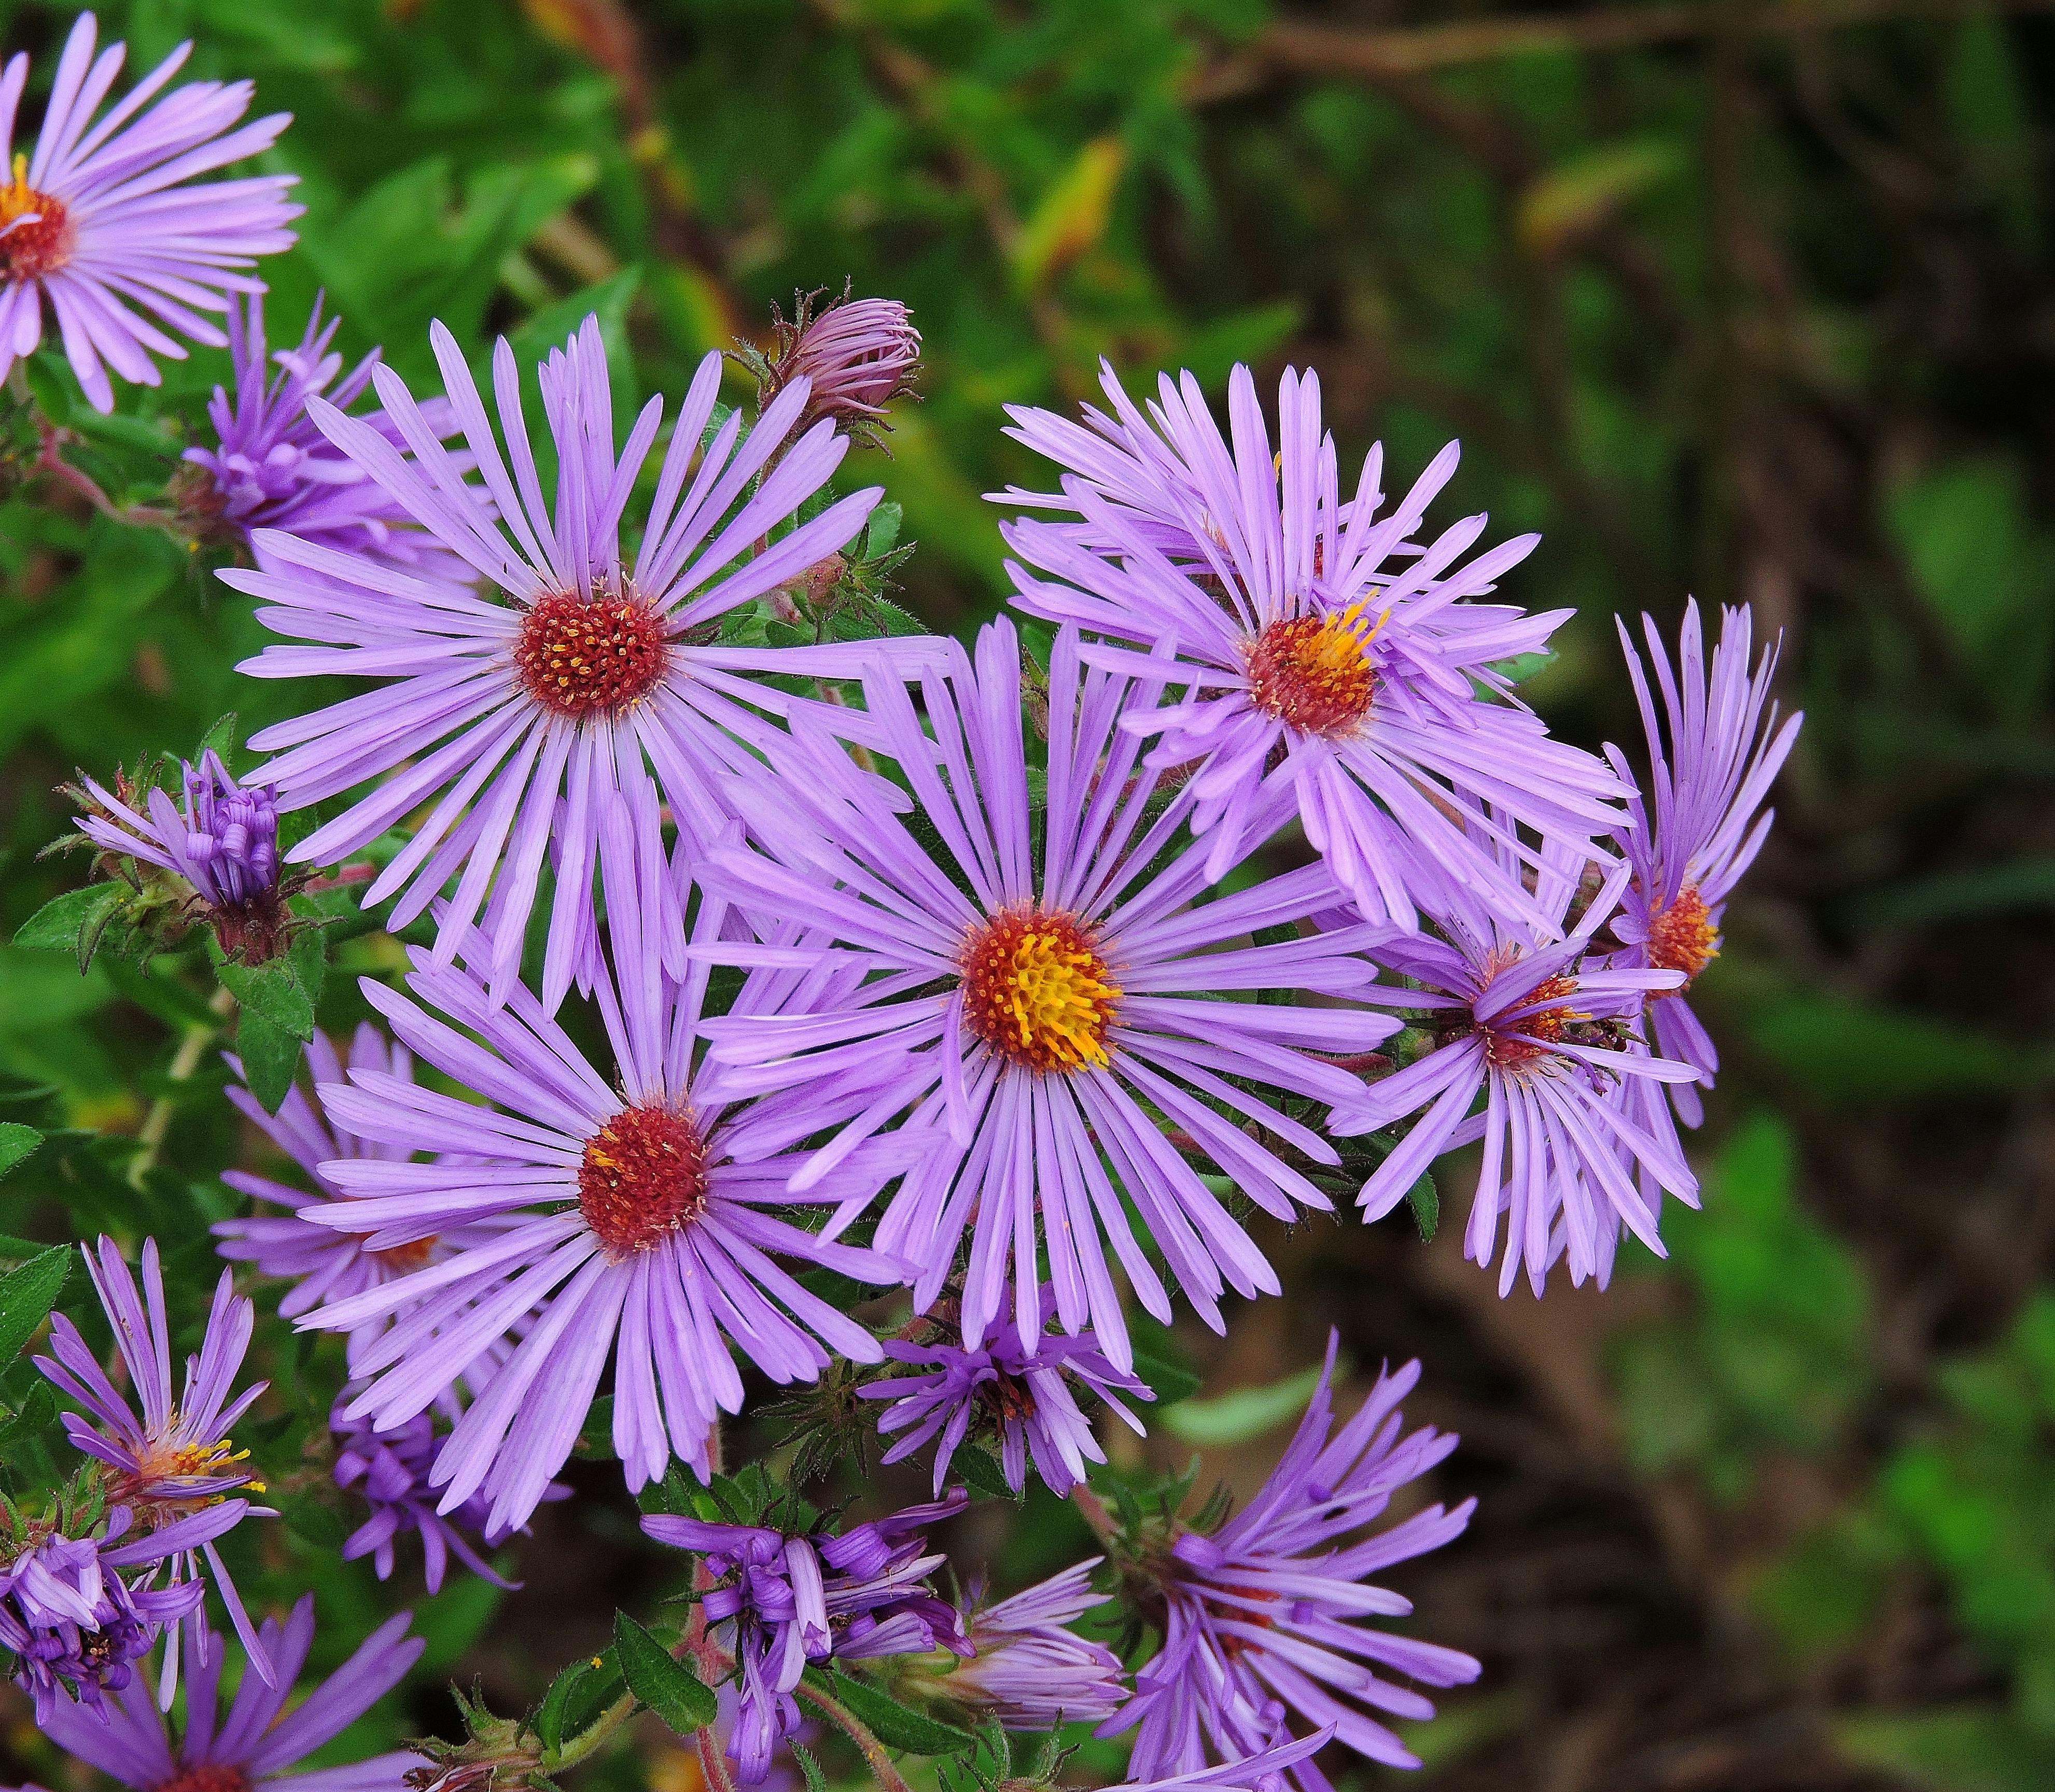 Free stock photo of purple asters, Purple wildflowers, wildflowers